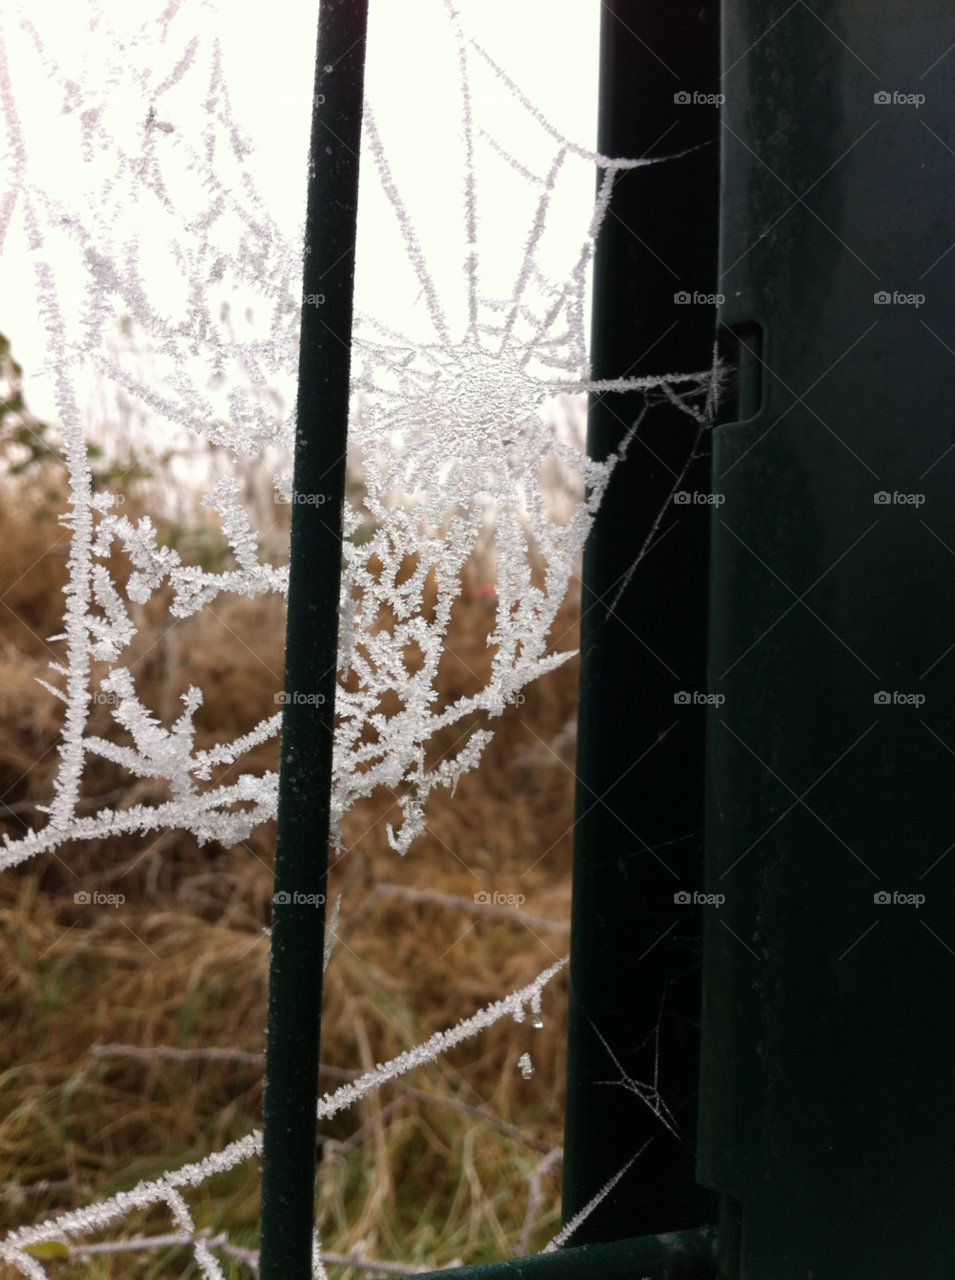 winter web spiderweb icy by judgefunkymunky